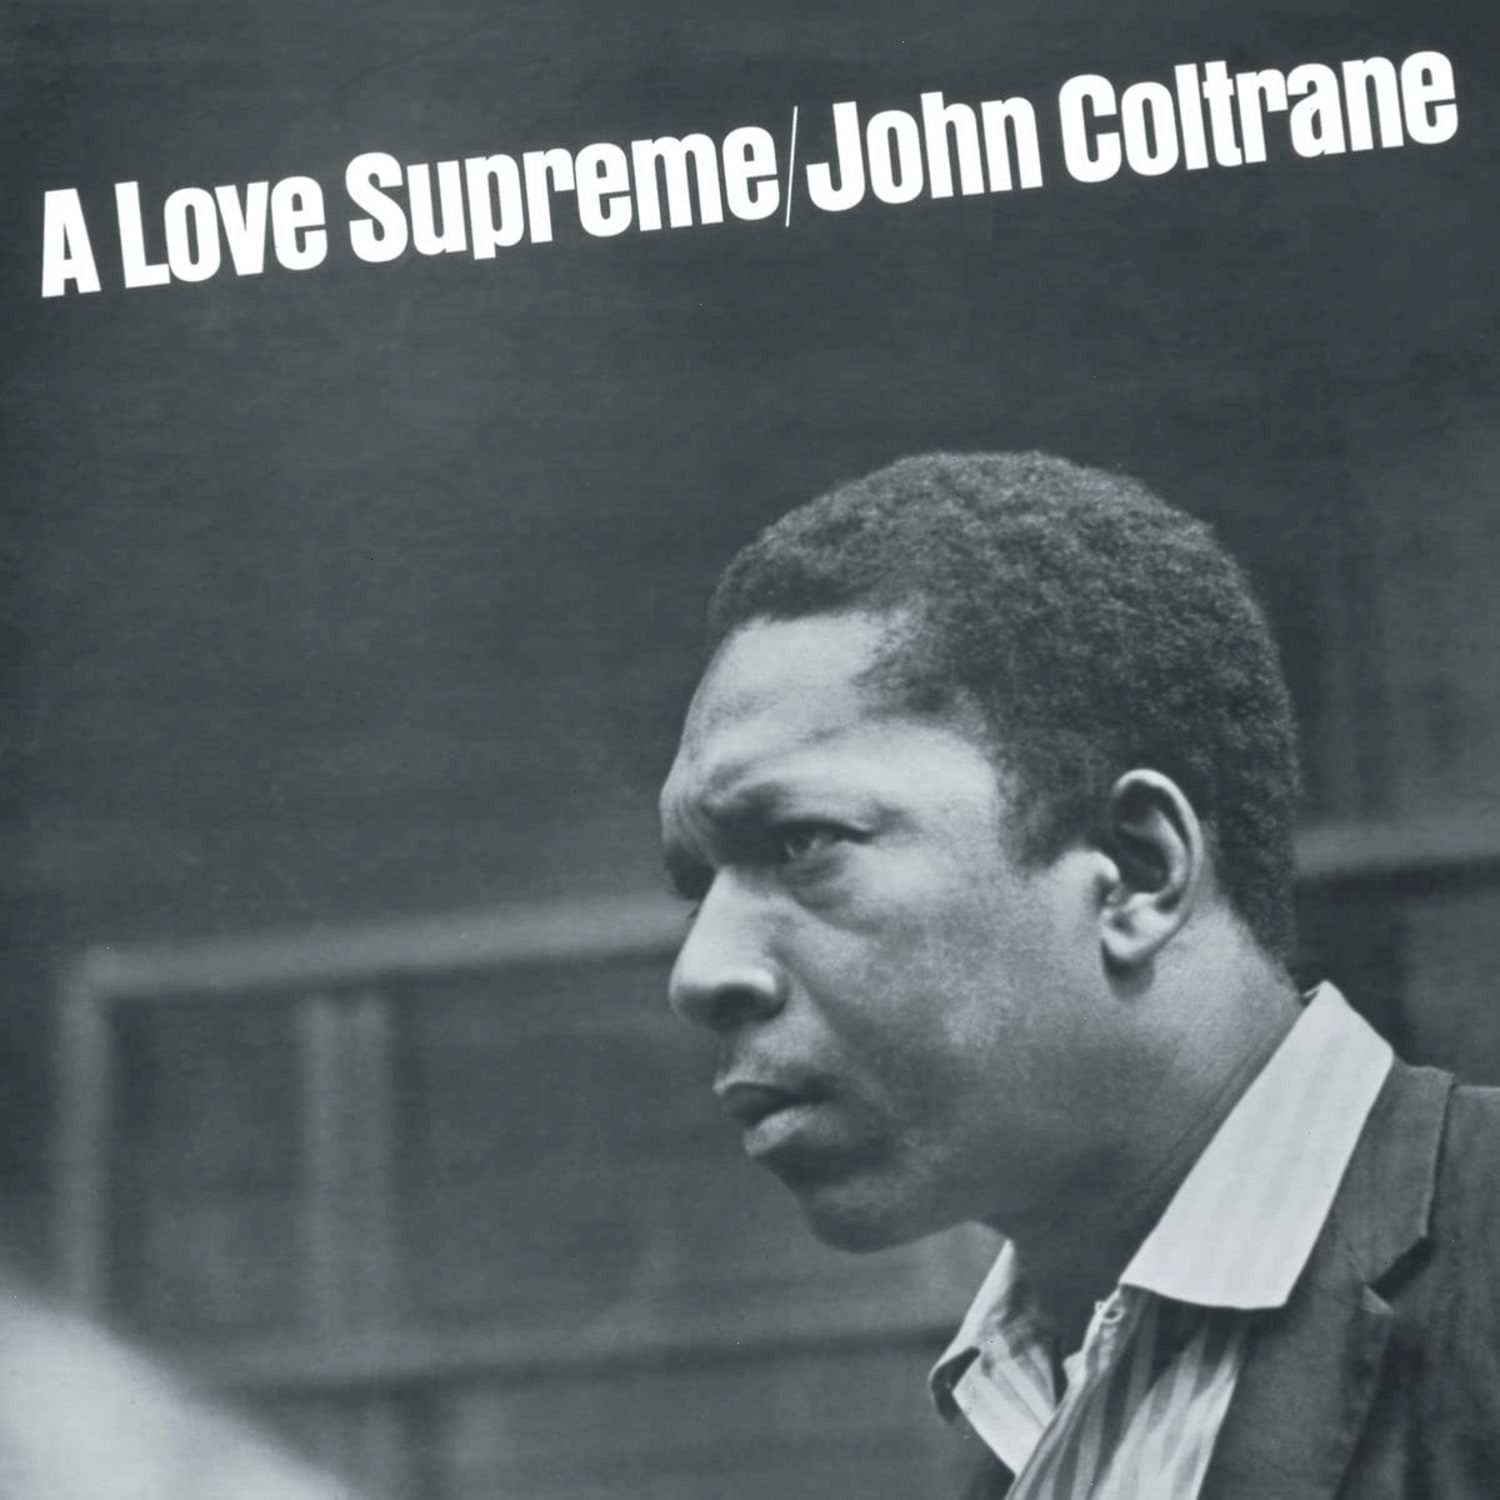 John Coltrane – Love Supreme (Vinyl LP) on MovieShack